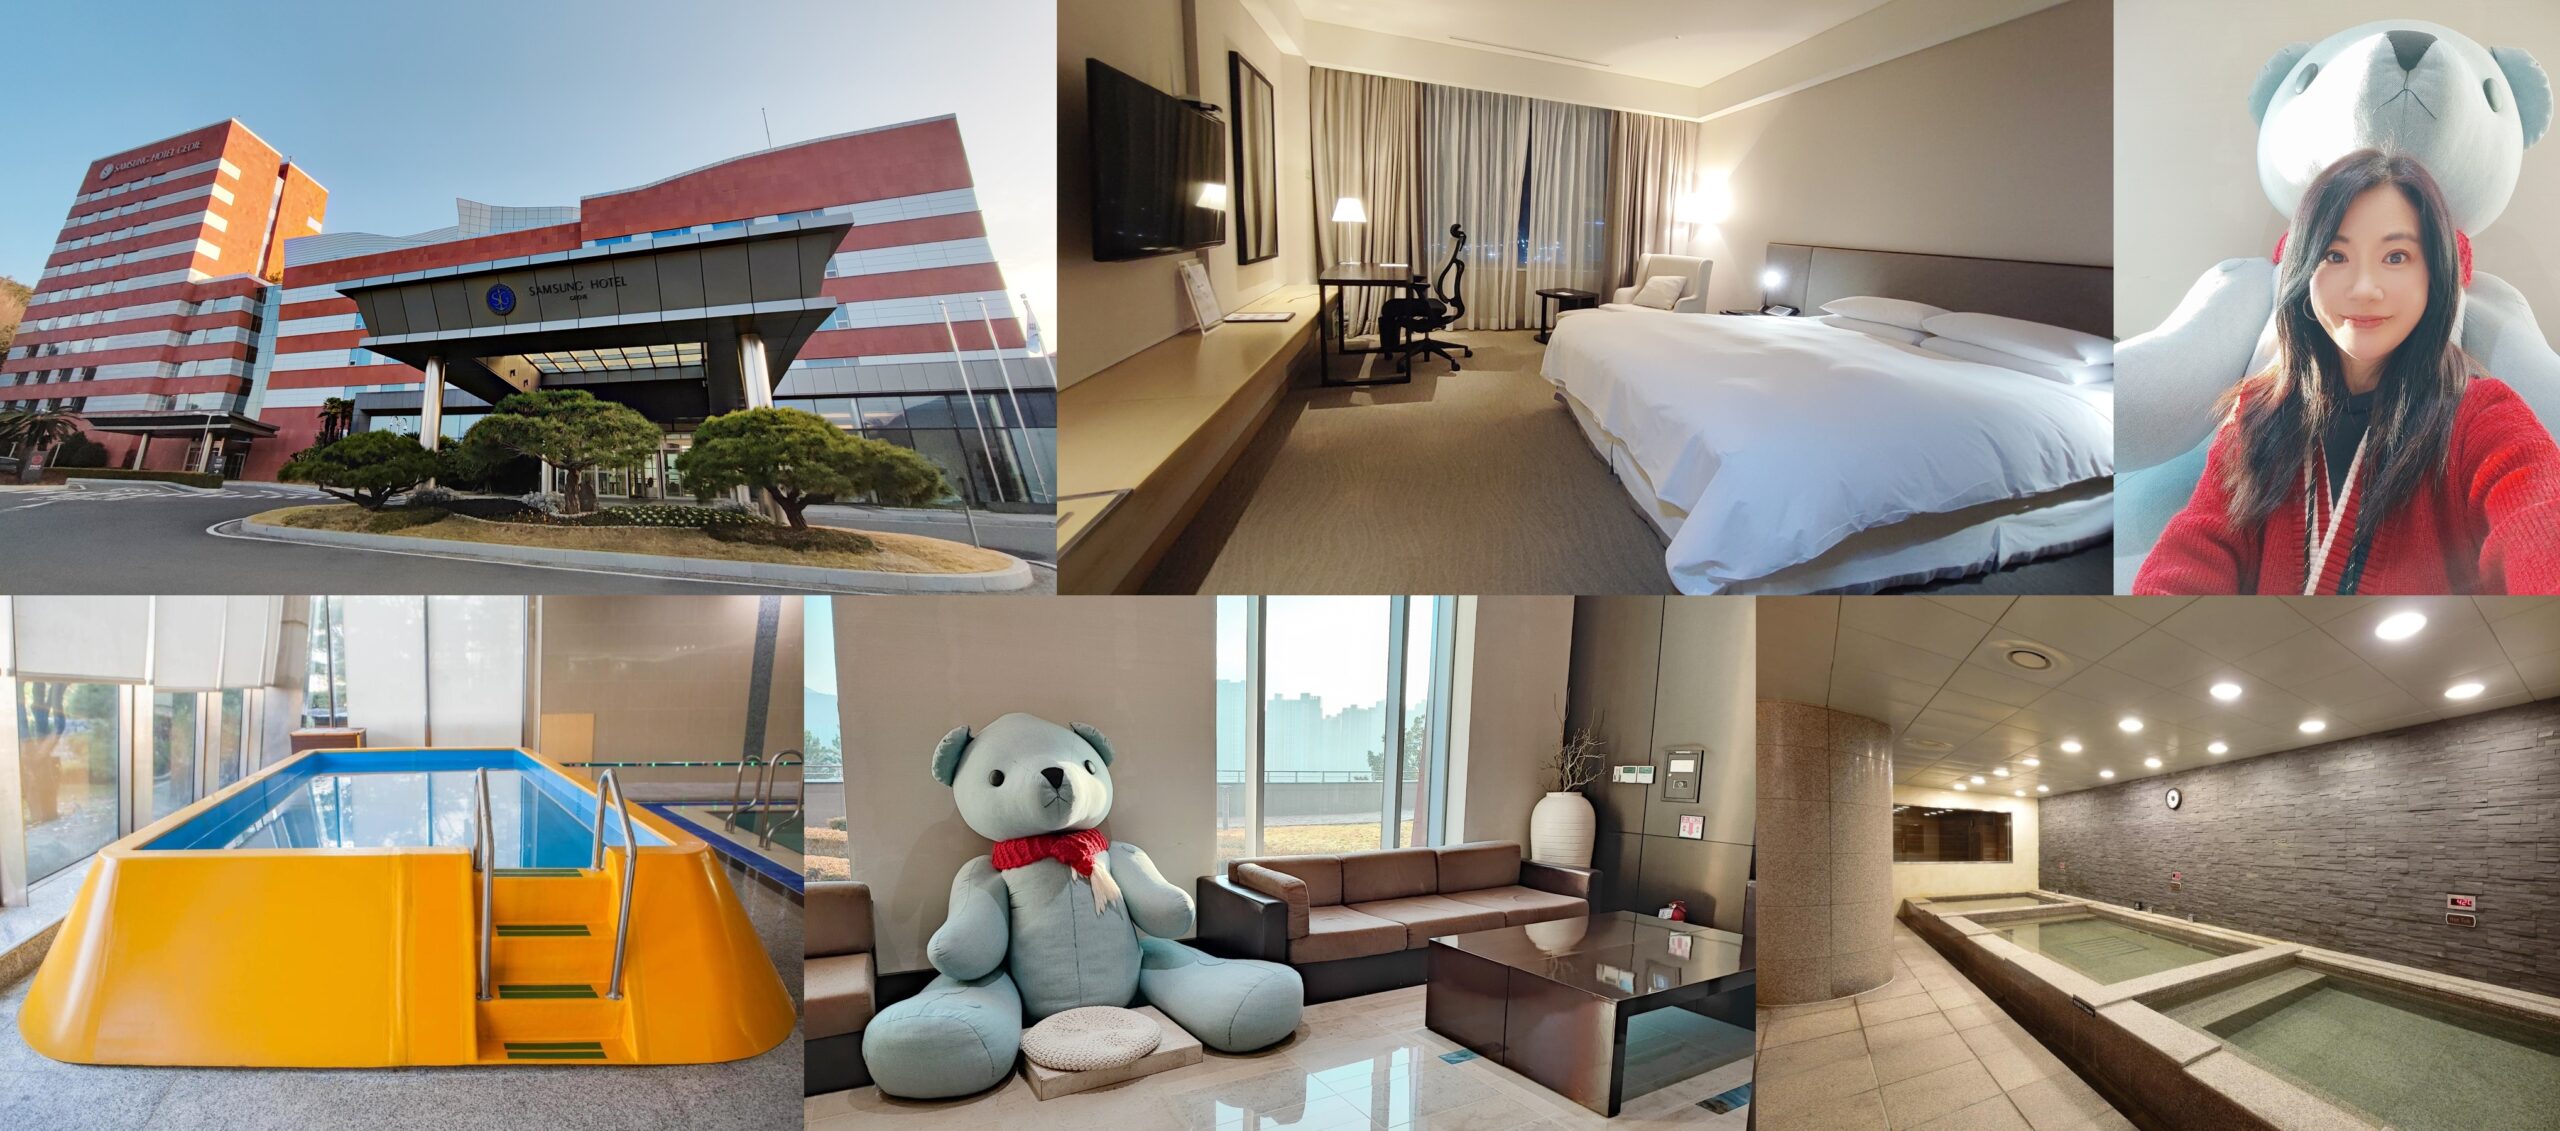 Geoje Samsung Hotel,三星巨濟飯店,巨濟Geoje,巨濟飯店,慶尚南道,韓國旅遊